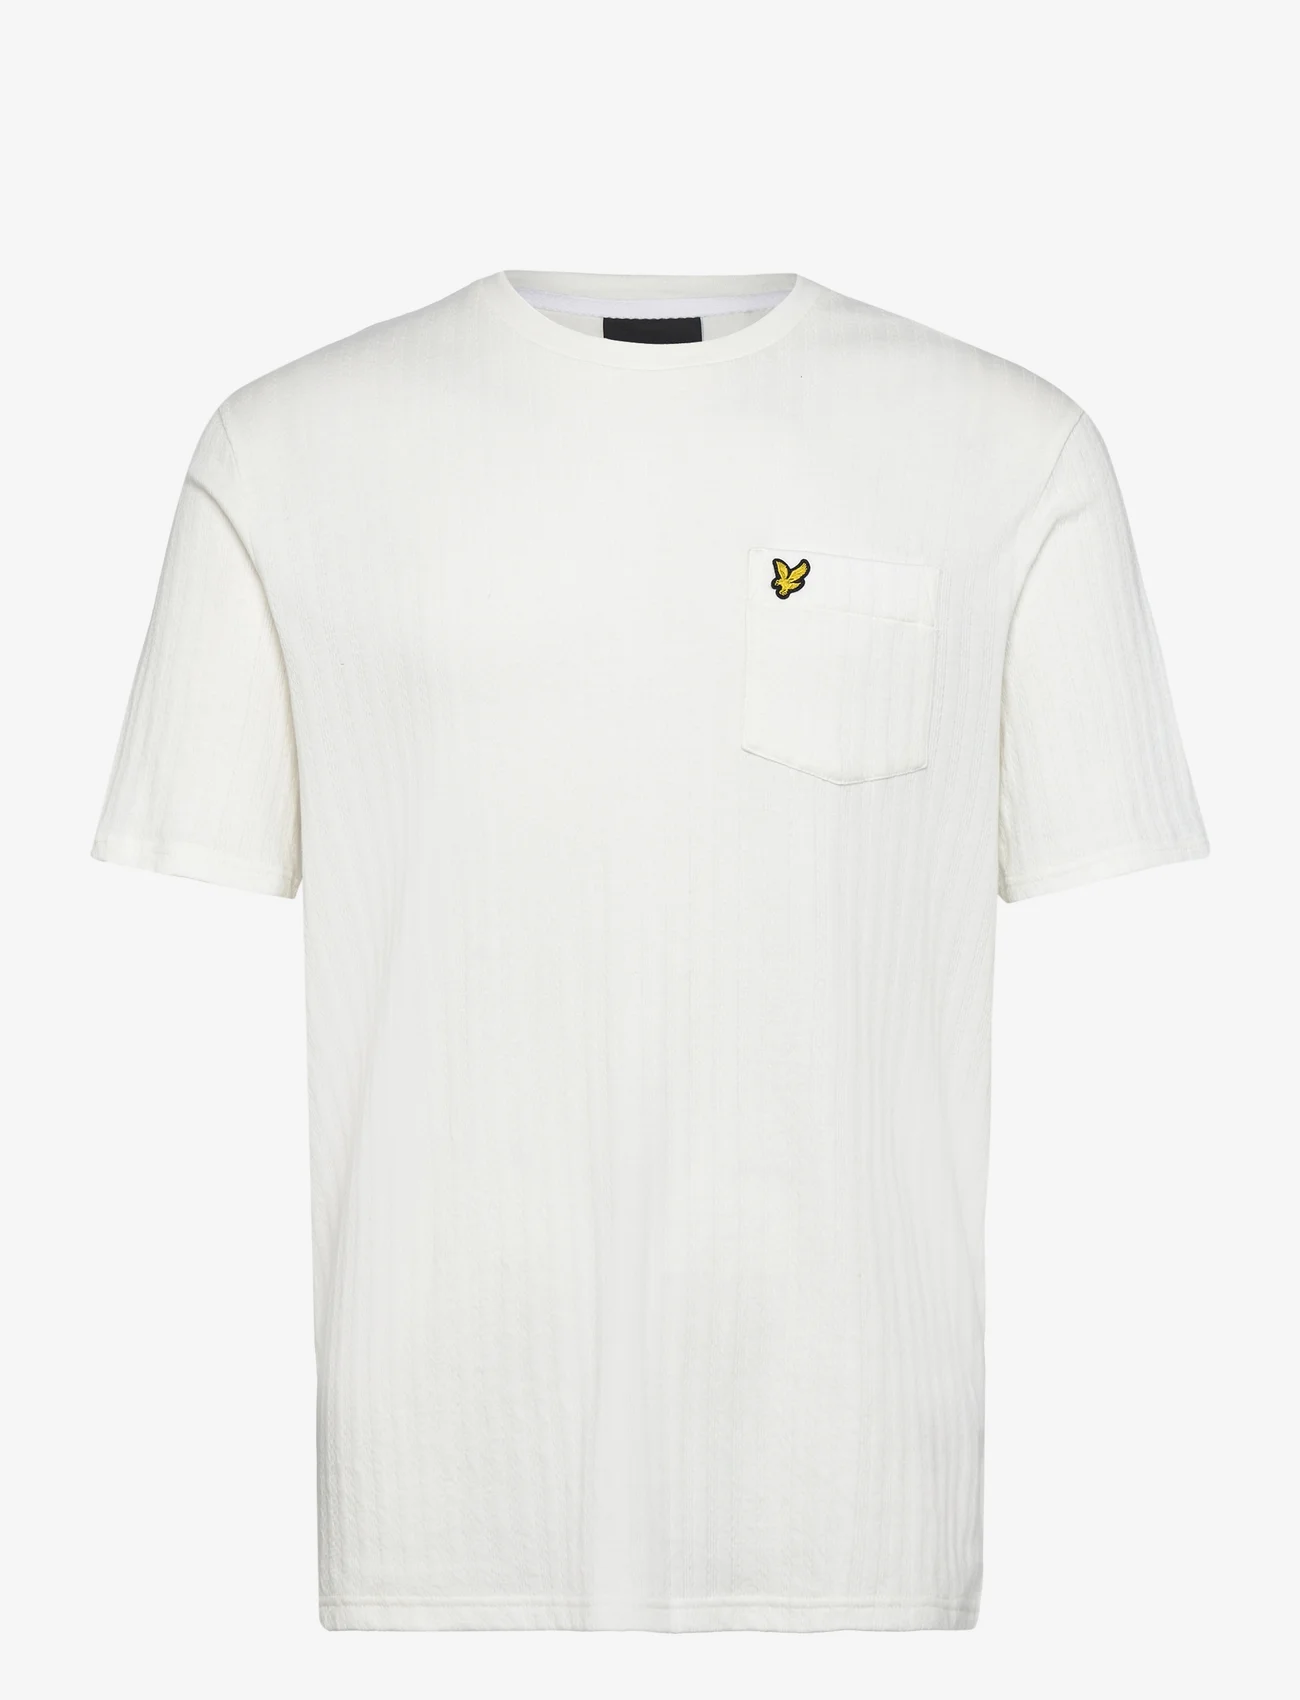 Lyle & Scott - Textured Stripe T-Shirt - short-sleeved t-shirts - x157 chalk - 0